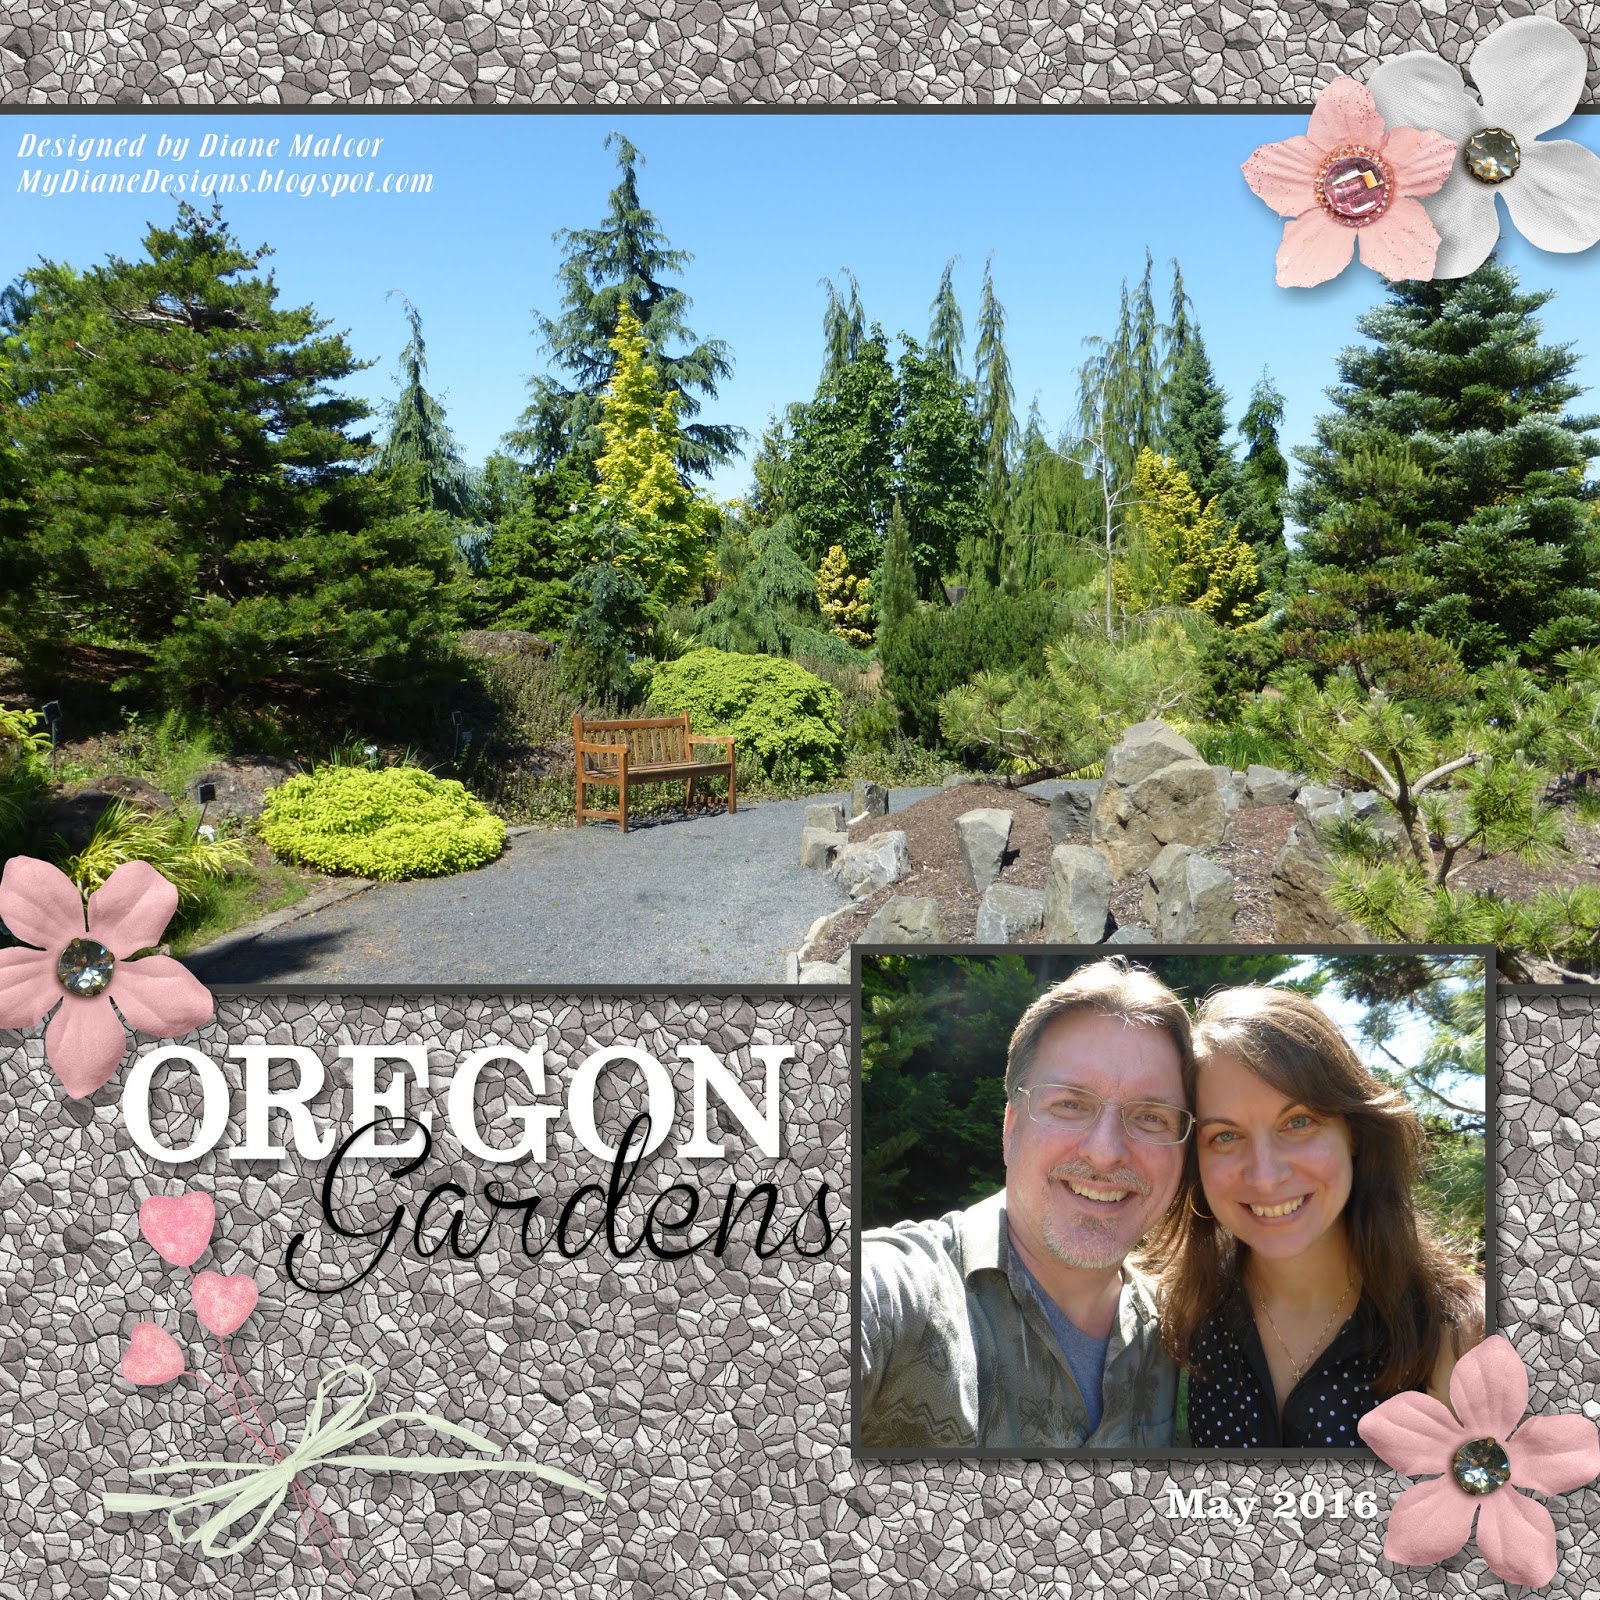 MyDiane Designs: Oregon Gardens